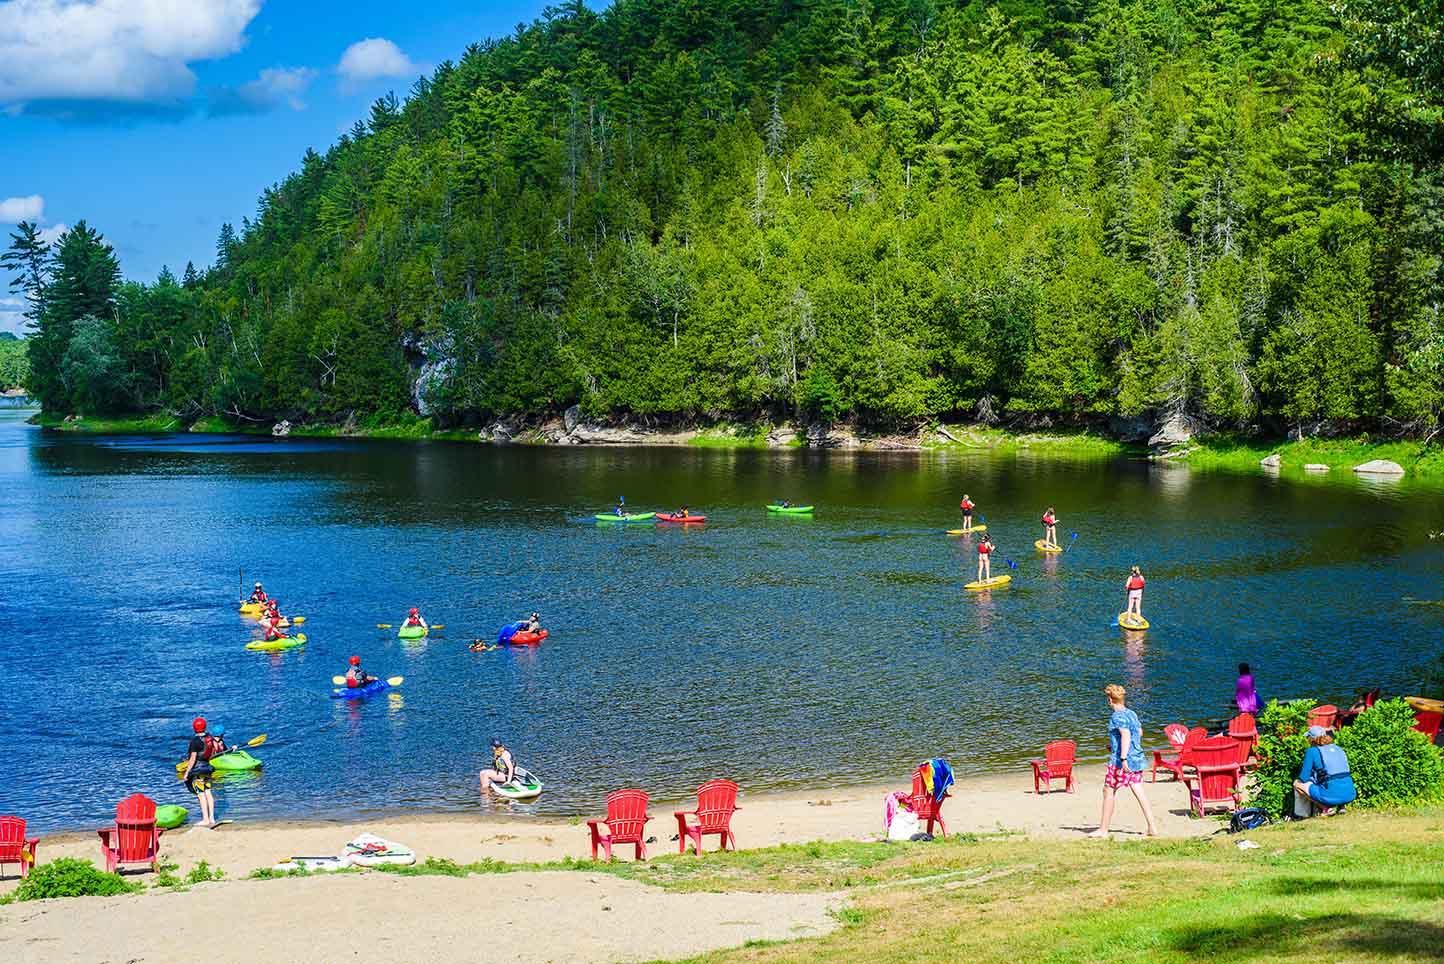 Beach-Resort-Activities-National-Whitewater-Park-Wilderness-Tours-SUP-Kayaks-Lounge-Relax-Ottawa-River-Ontario-Canada-Best-Summer-Vacation.jpg